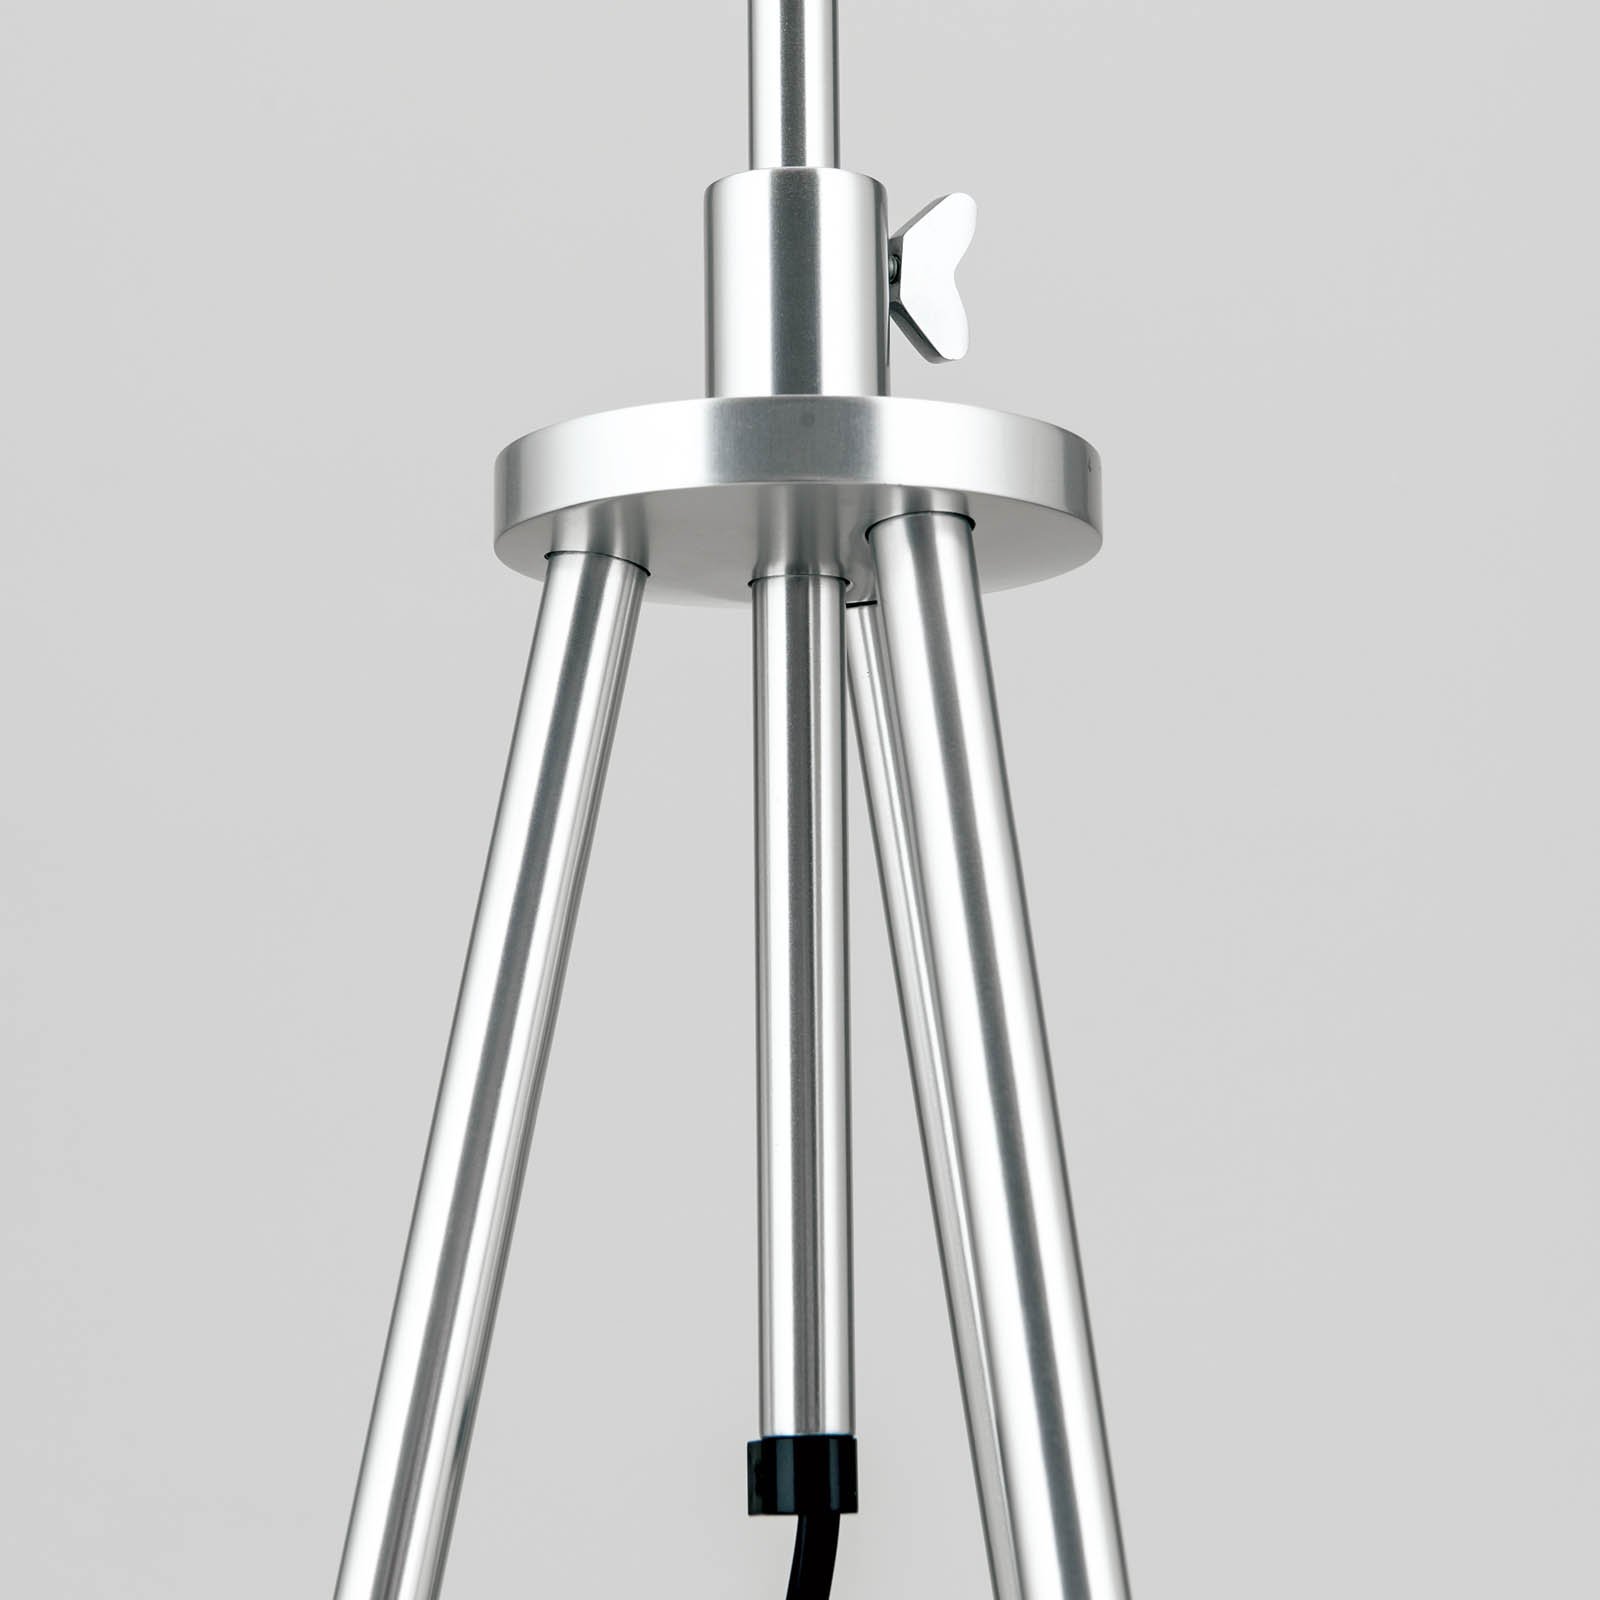 Roger floor lamp, tripod, height-adjustable